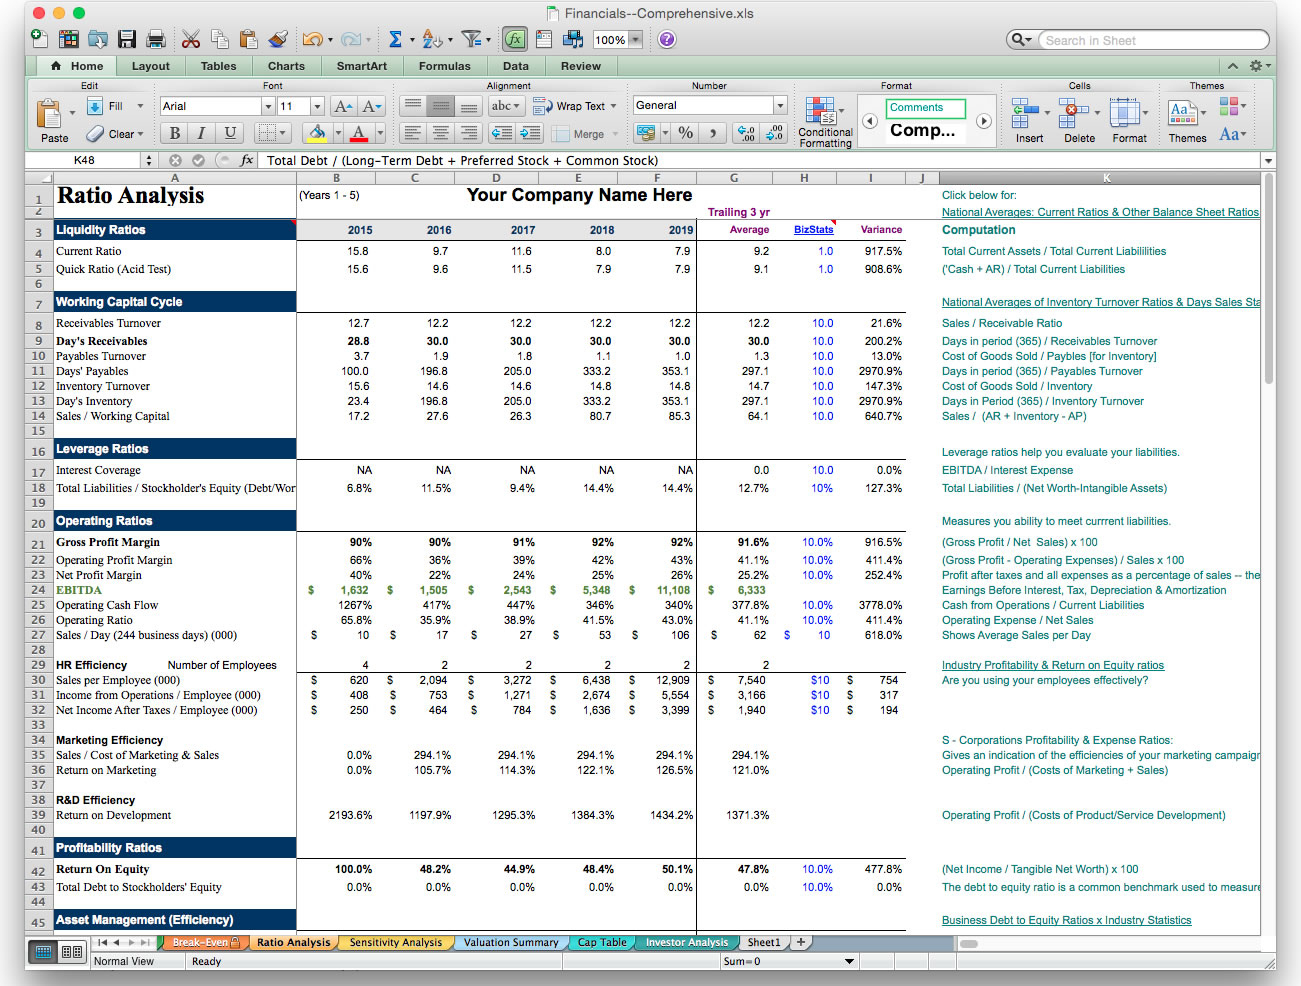 Business Plan Financial Model Template - Bizplanbuilder with Fresh Business Plan Spreadsheet Template Excel